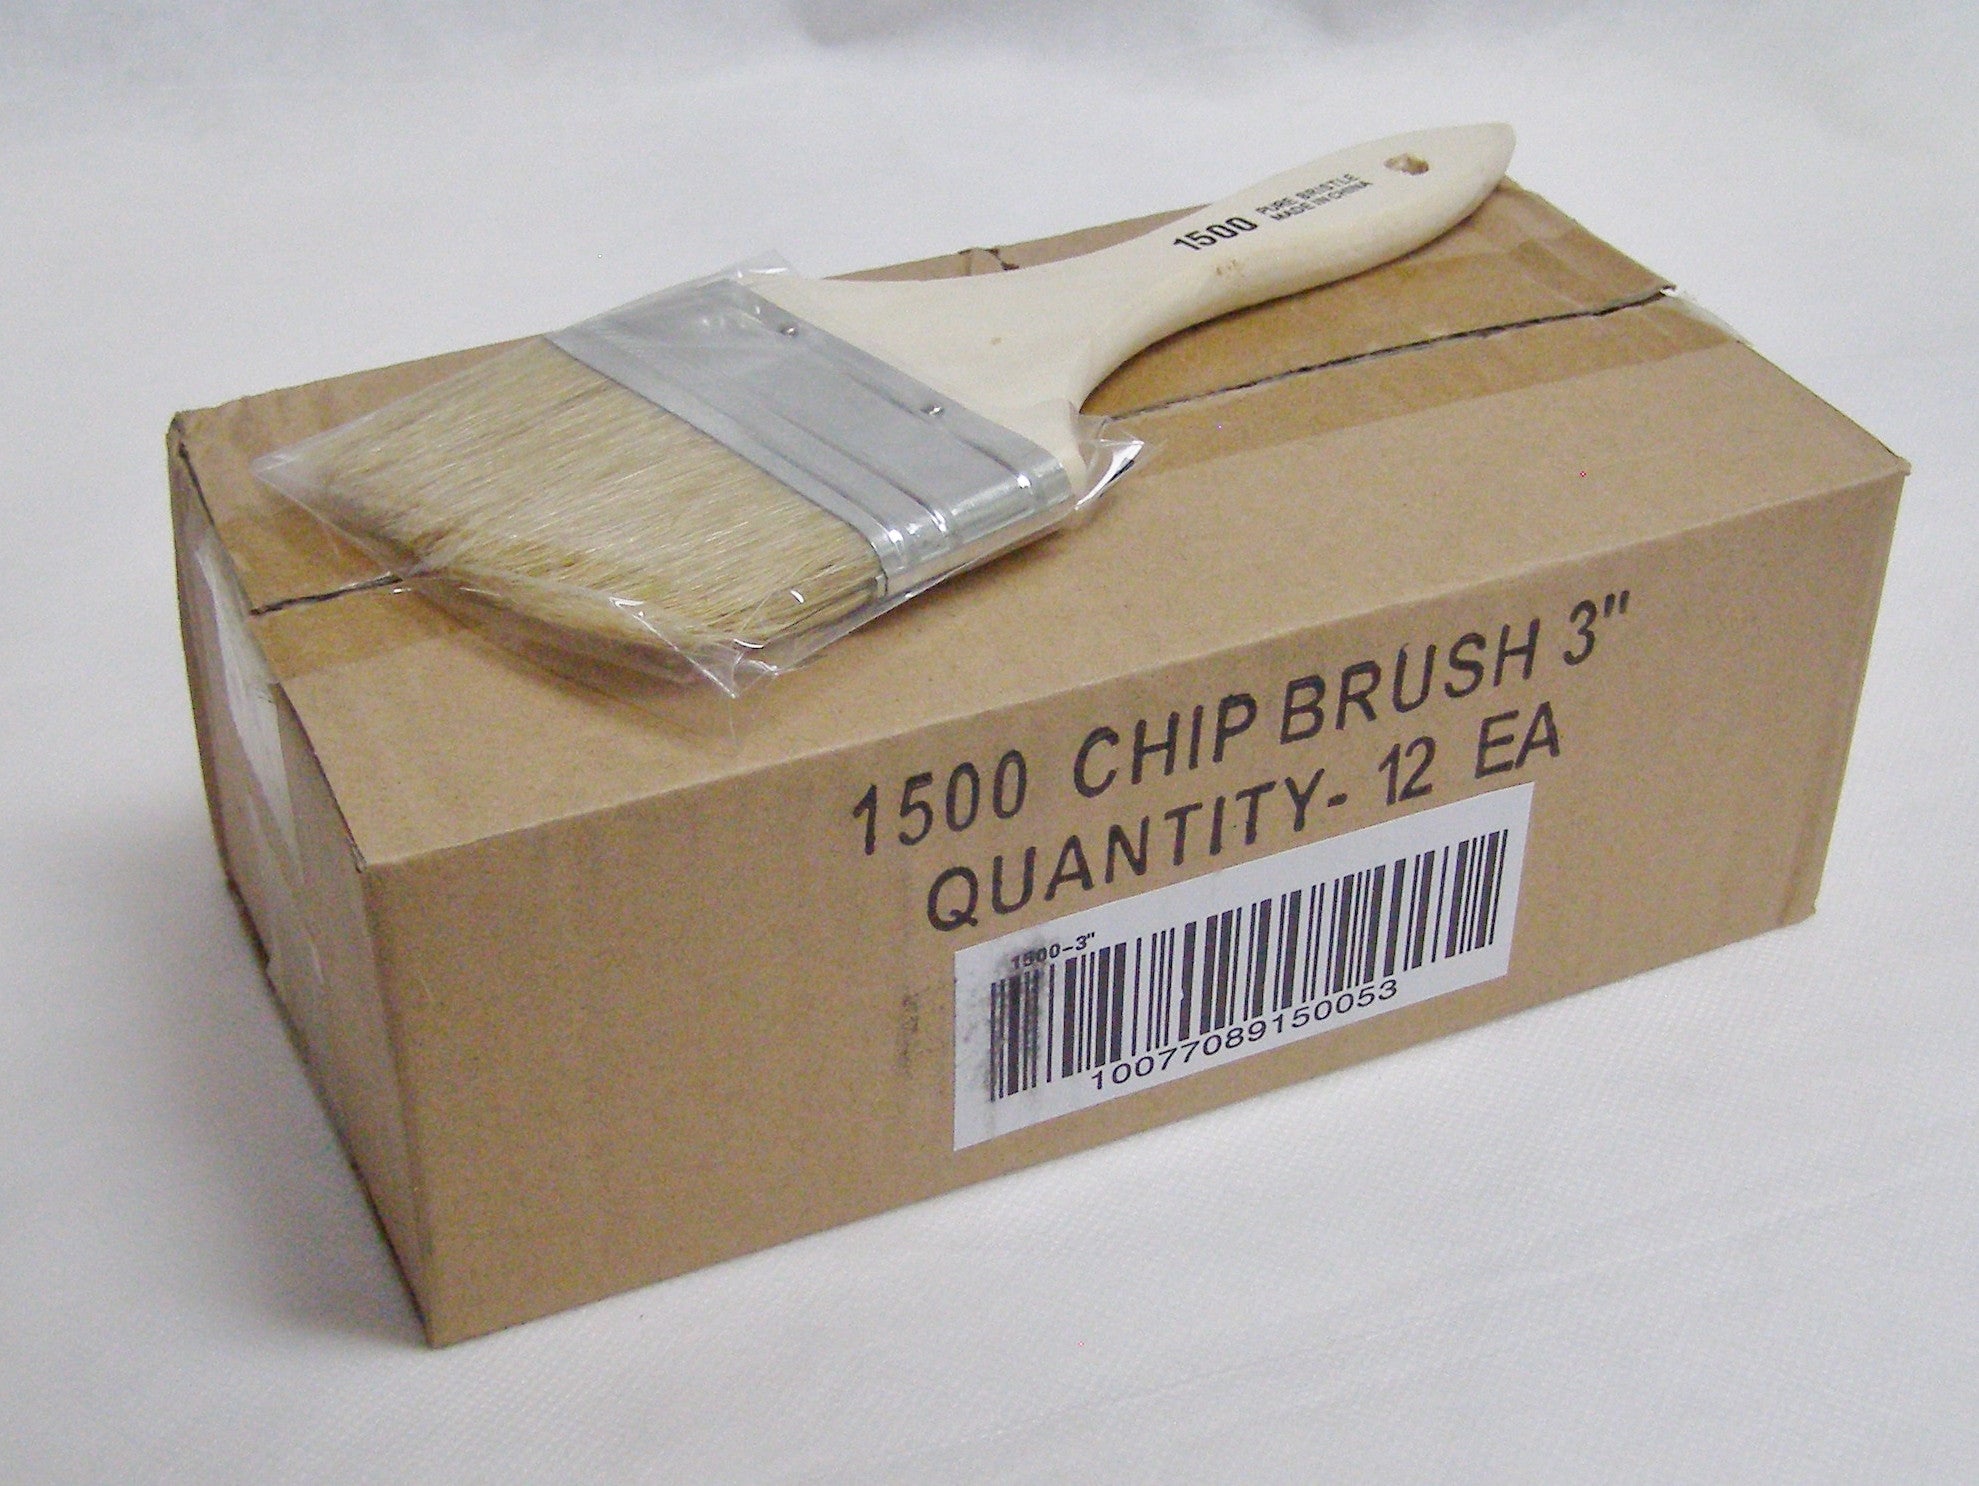 White China Bristle Chip Brush - 4 inch, Double Thick